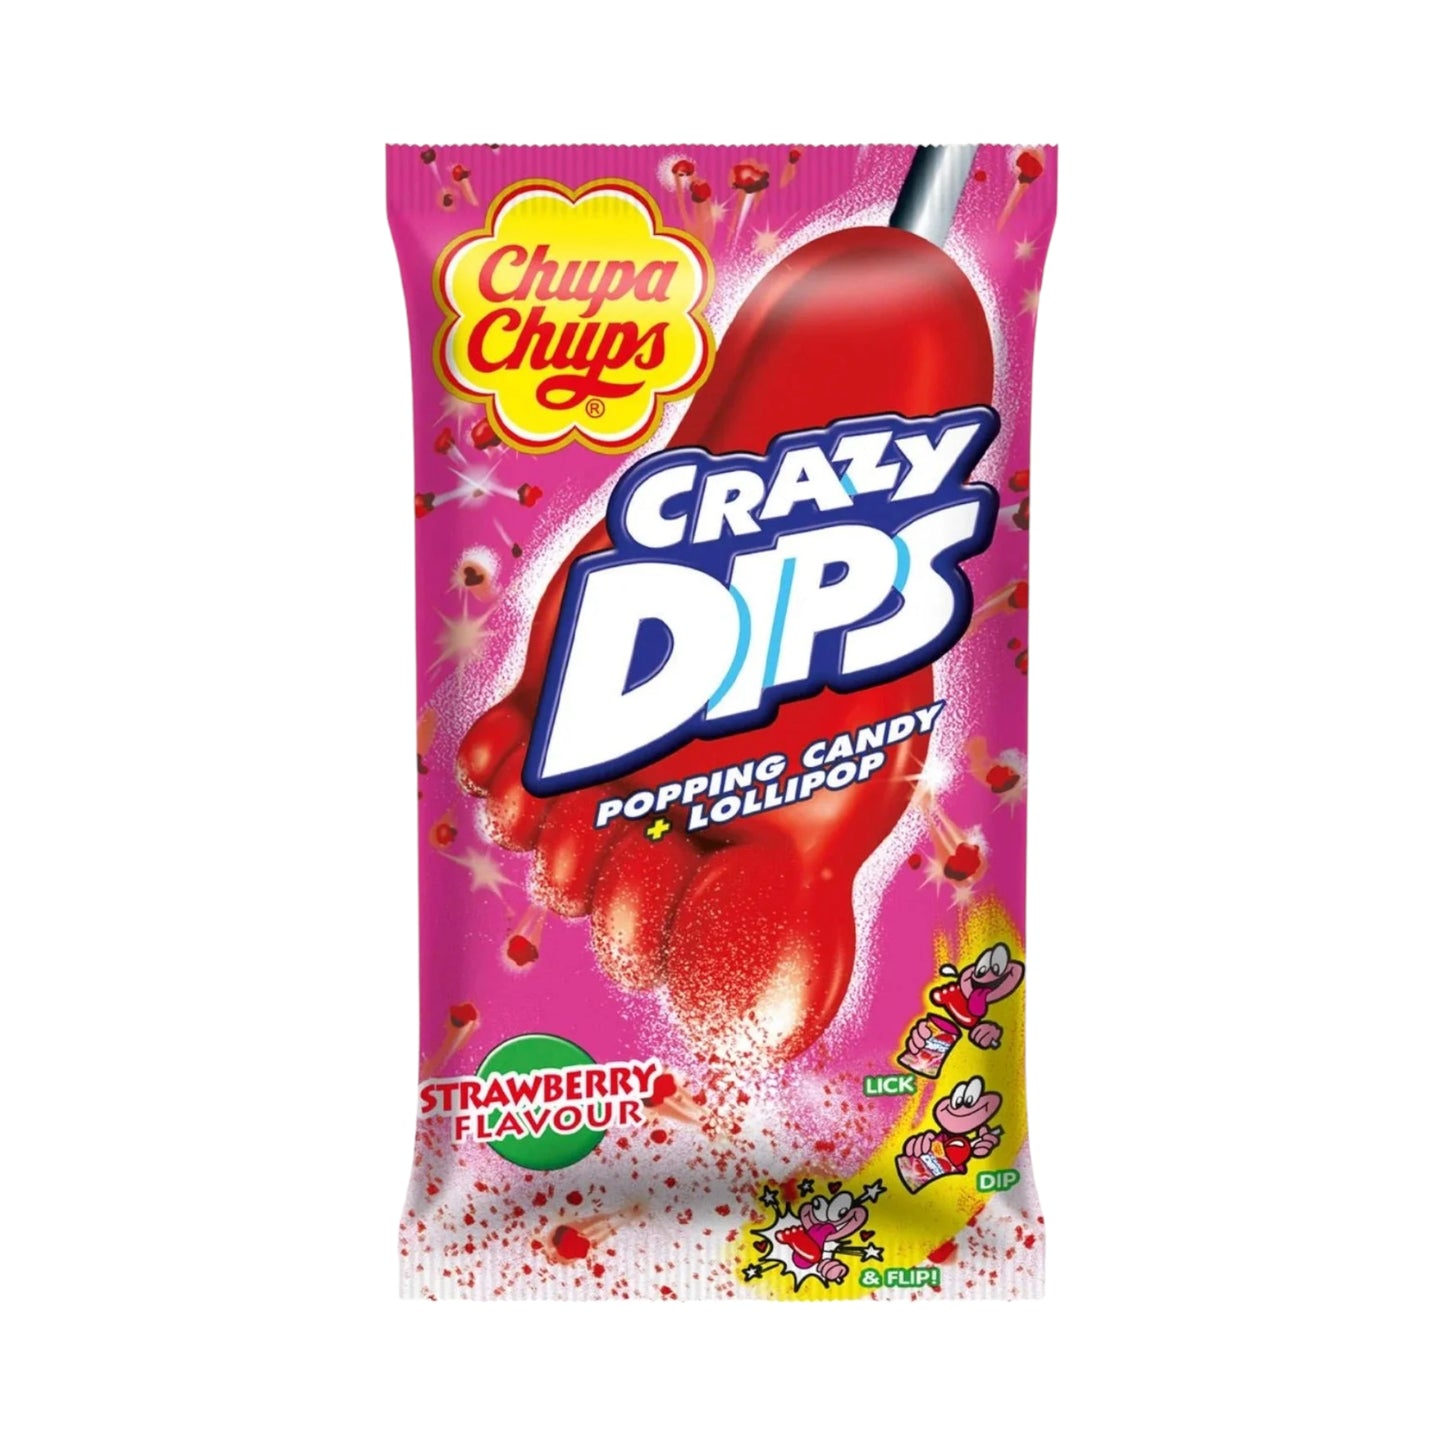 Chupa Chups Crazy Dips Popping Candy Strawberry 14g